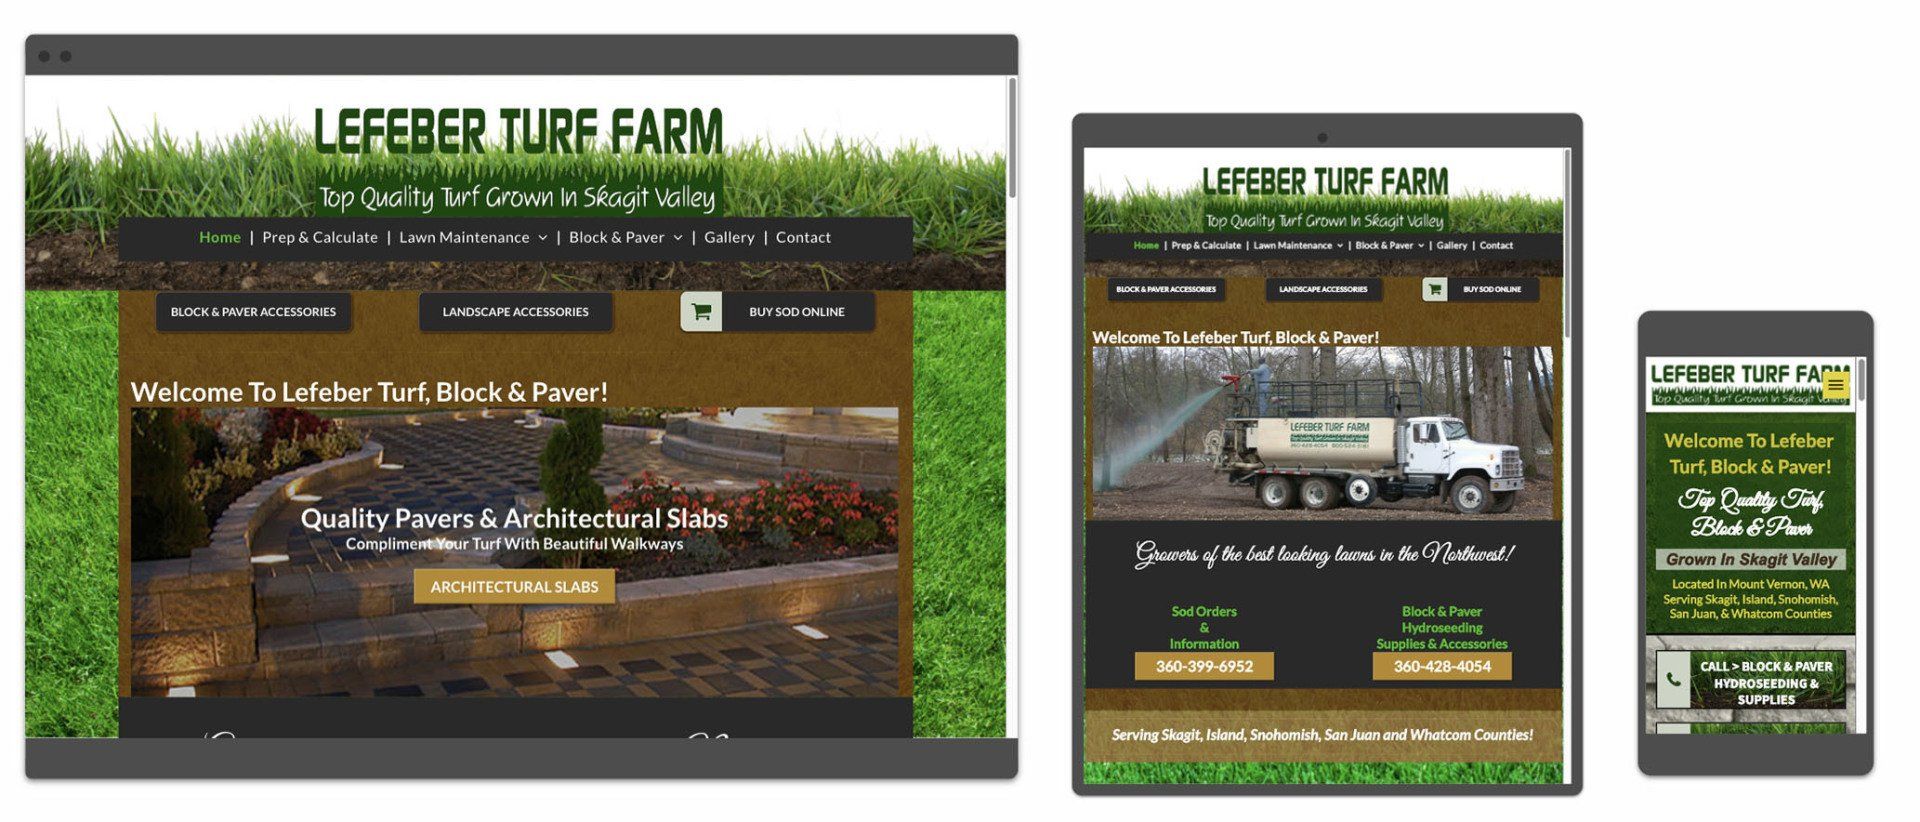 Lefeber Turf Farm website image